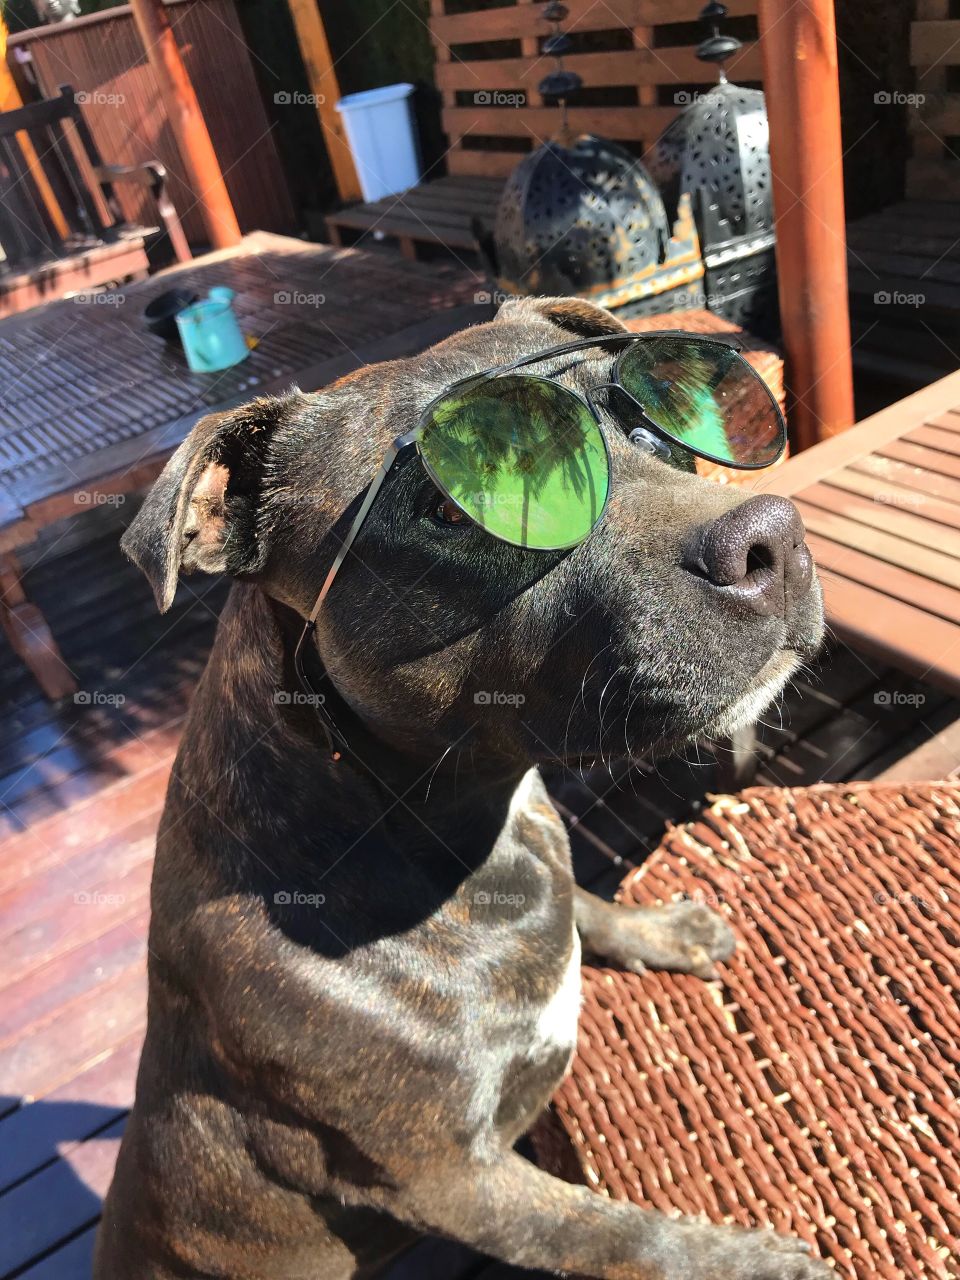 Dog with sunglasses!